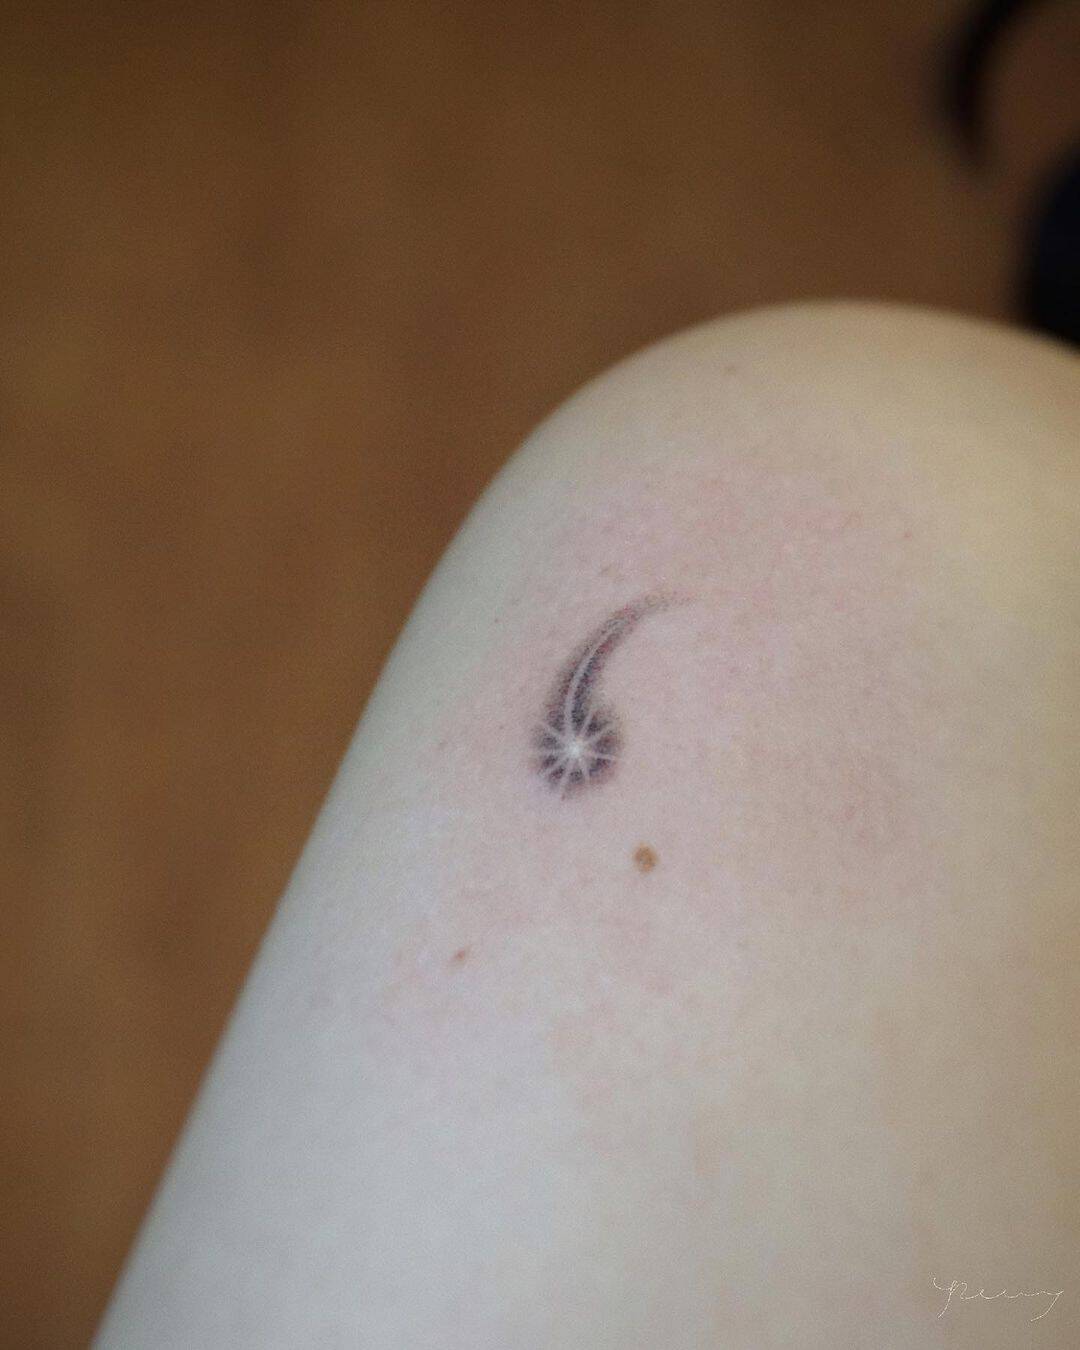 Shooting star tattoo by penny handpoke